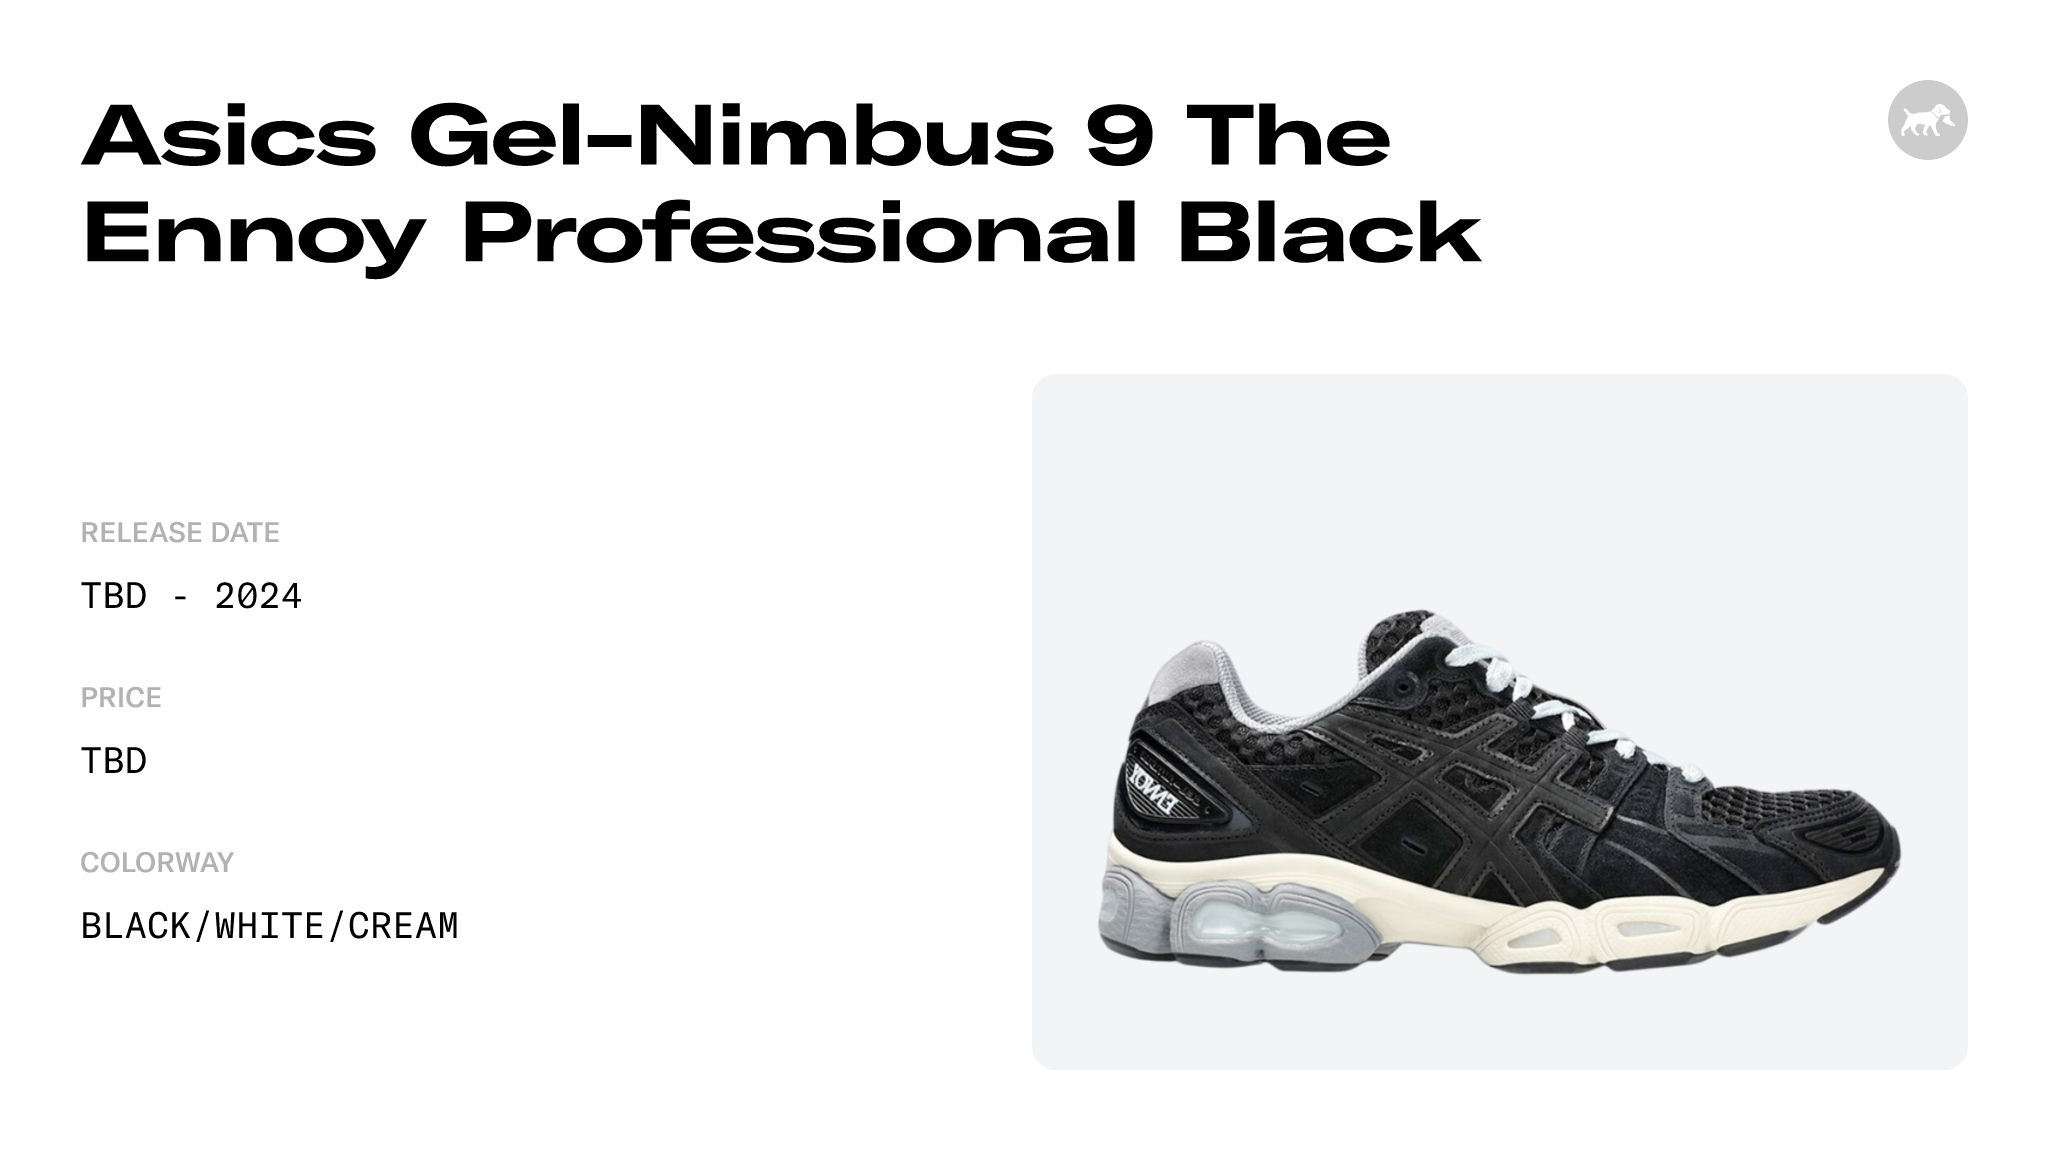 Asics Gel-Nimbus 9 The Ennoy Professional Black Raffles and